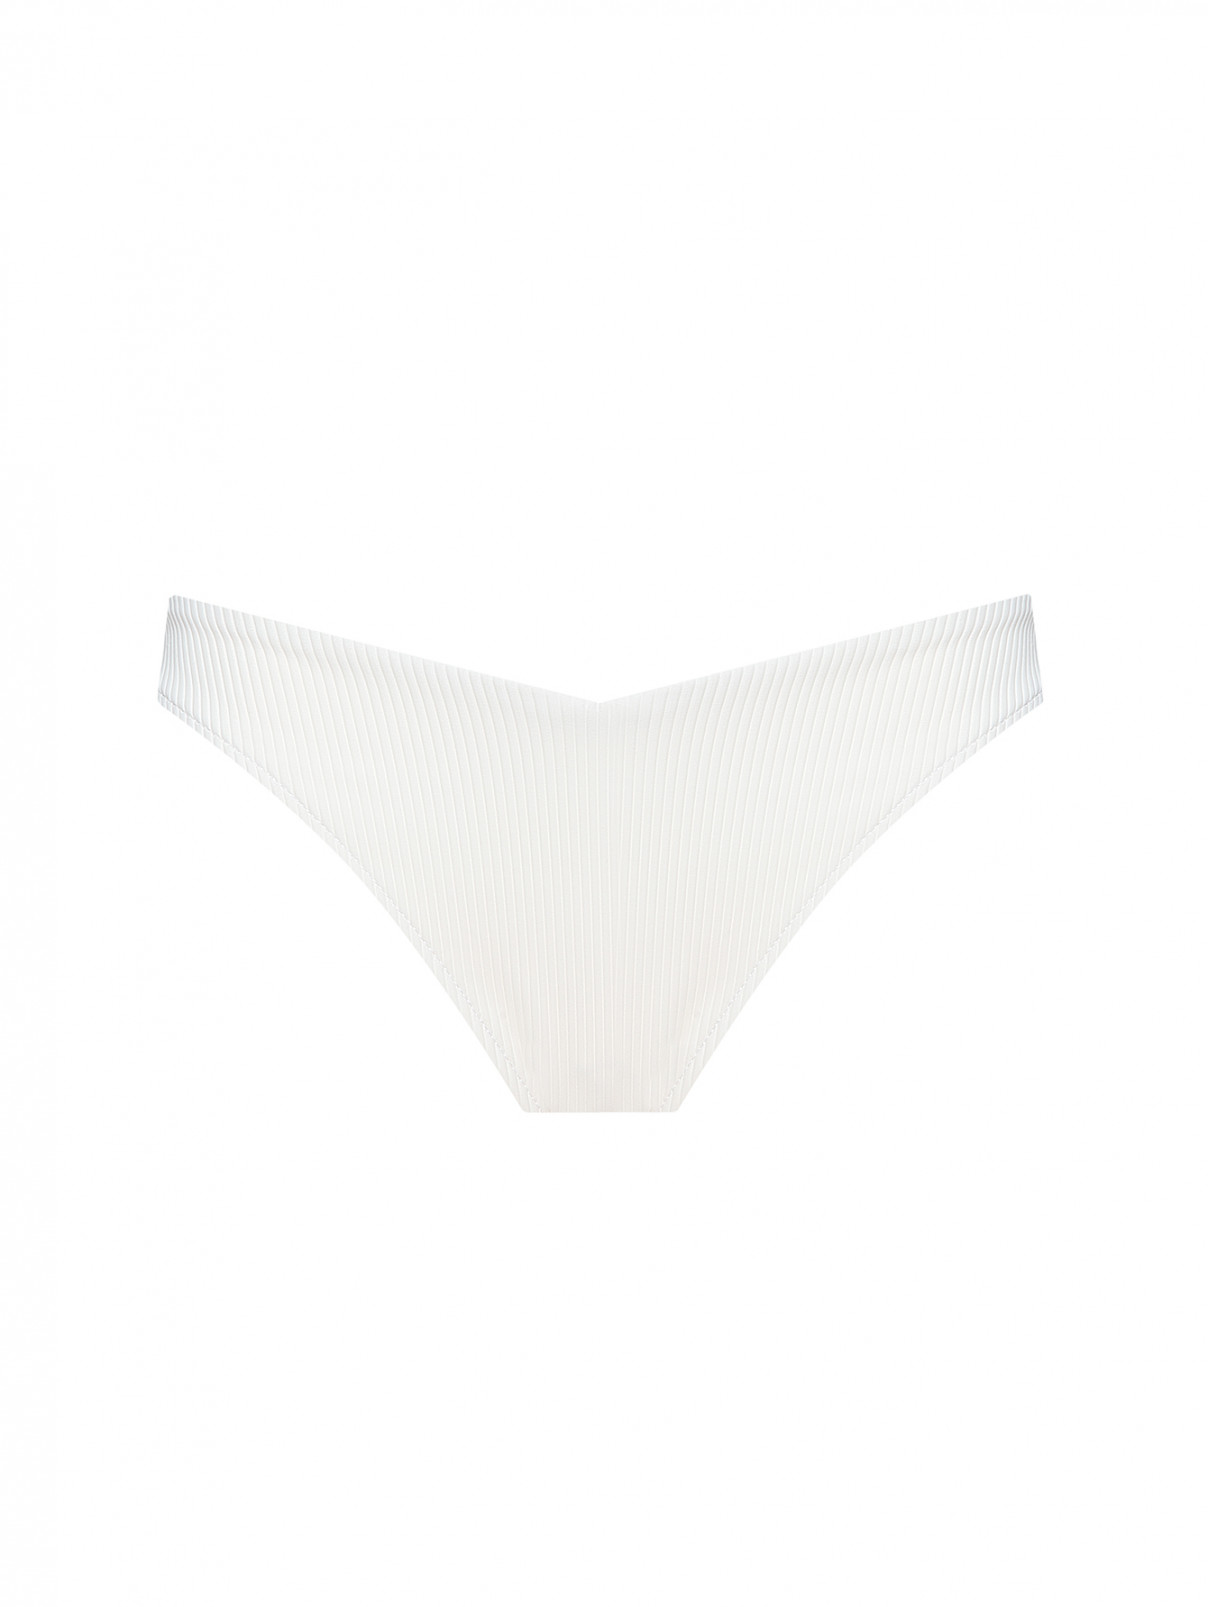 Купальник низ однотонный Frankies Bikinis  –  Общий вид  – Цвет:  Белый